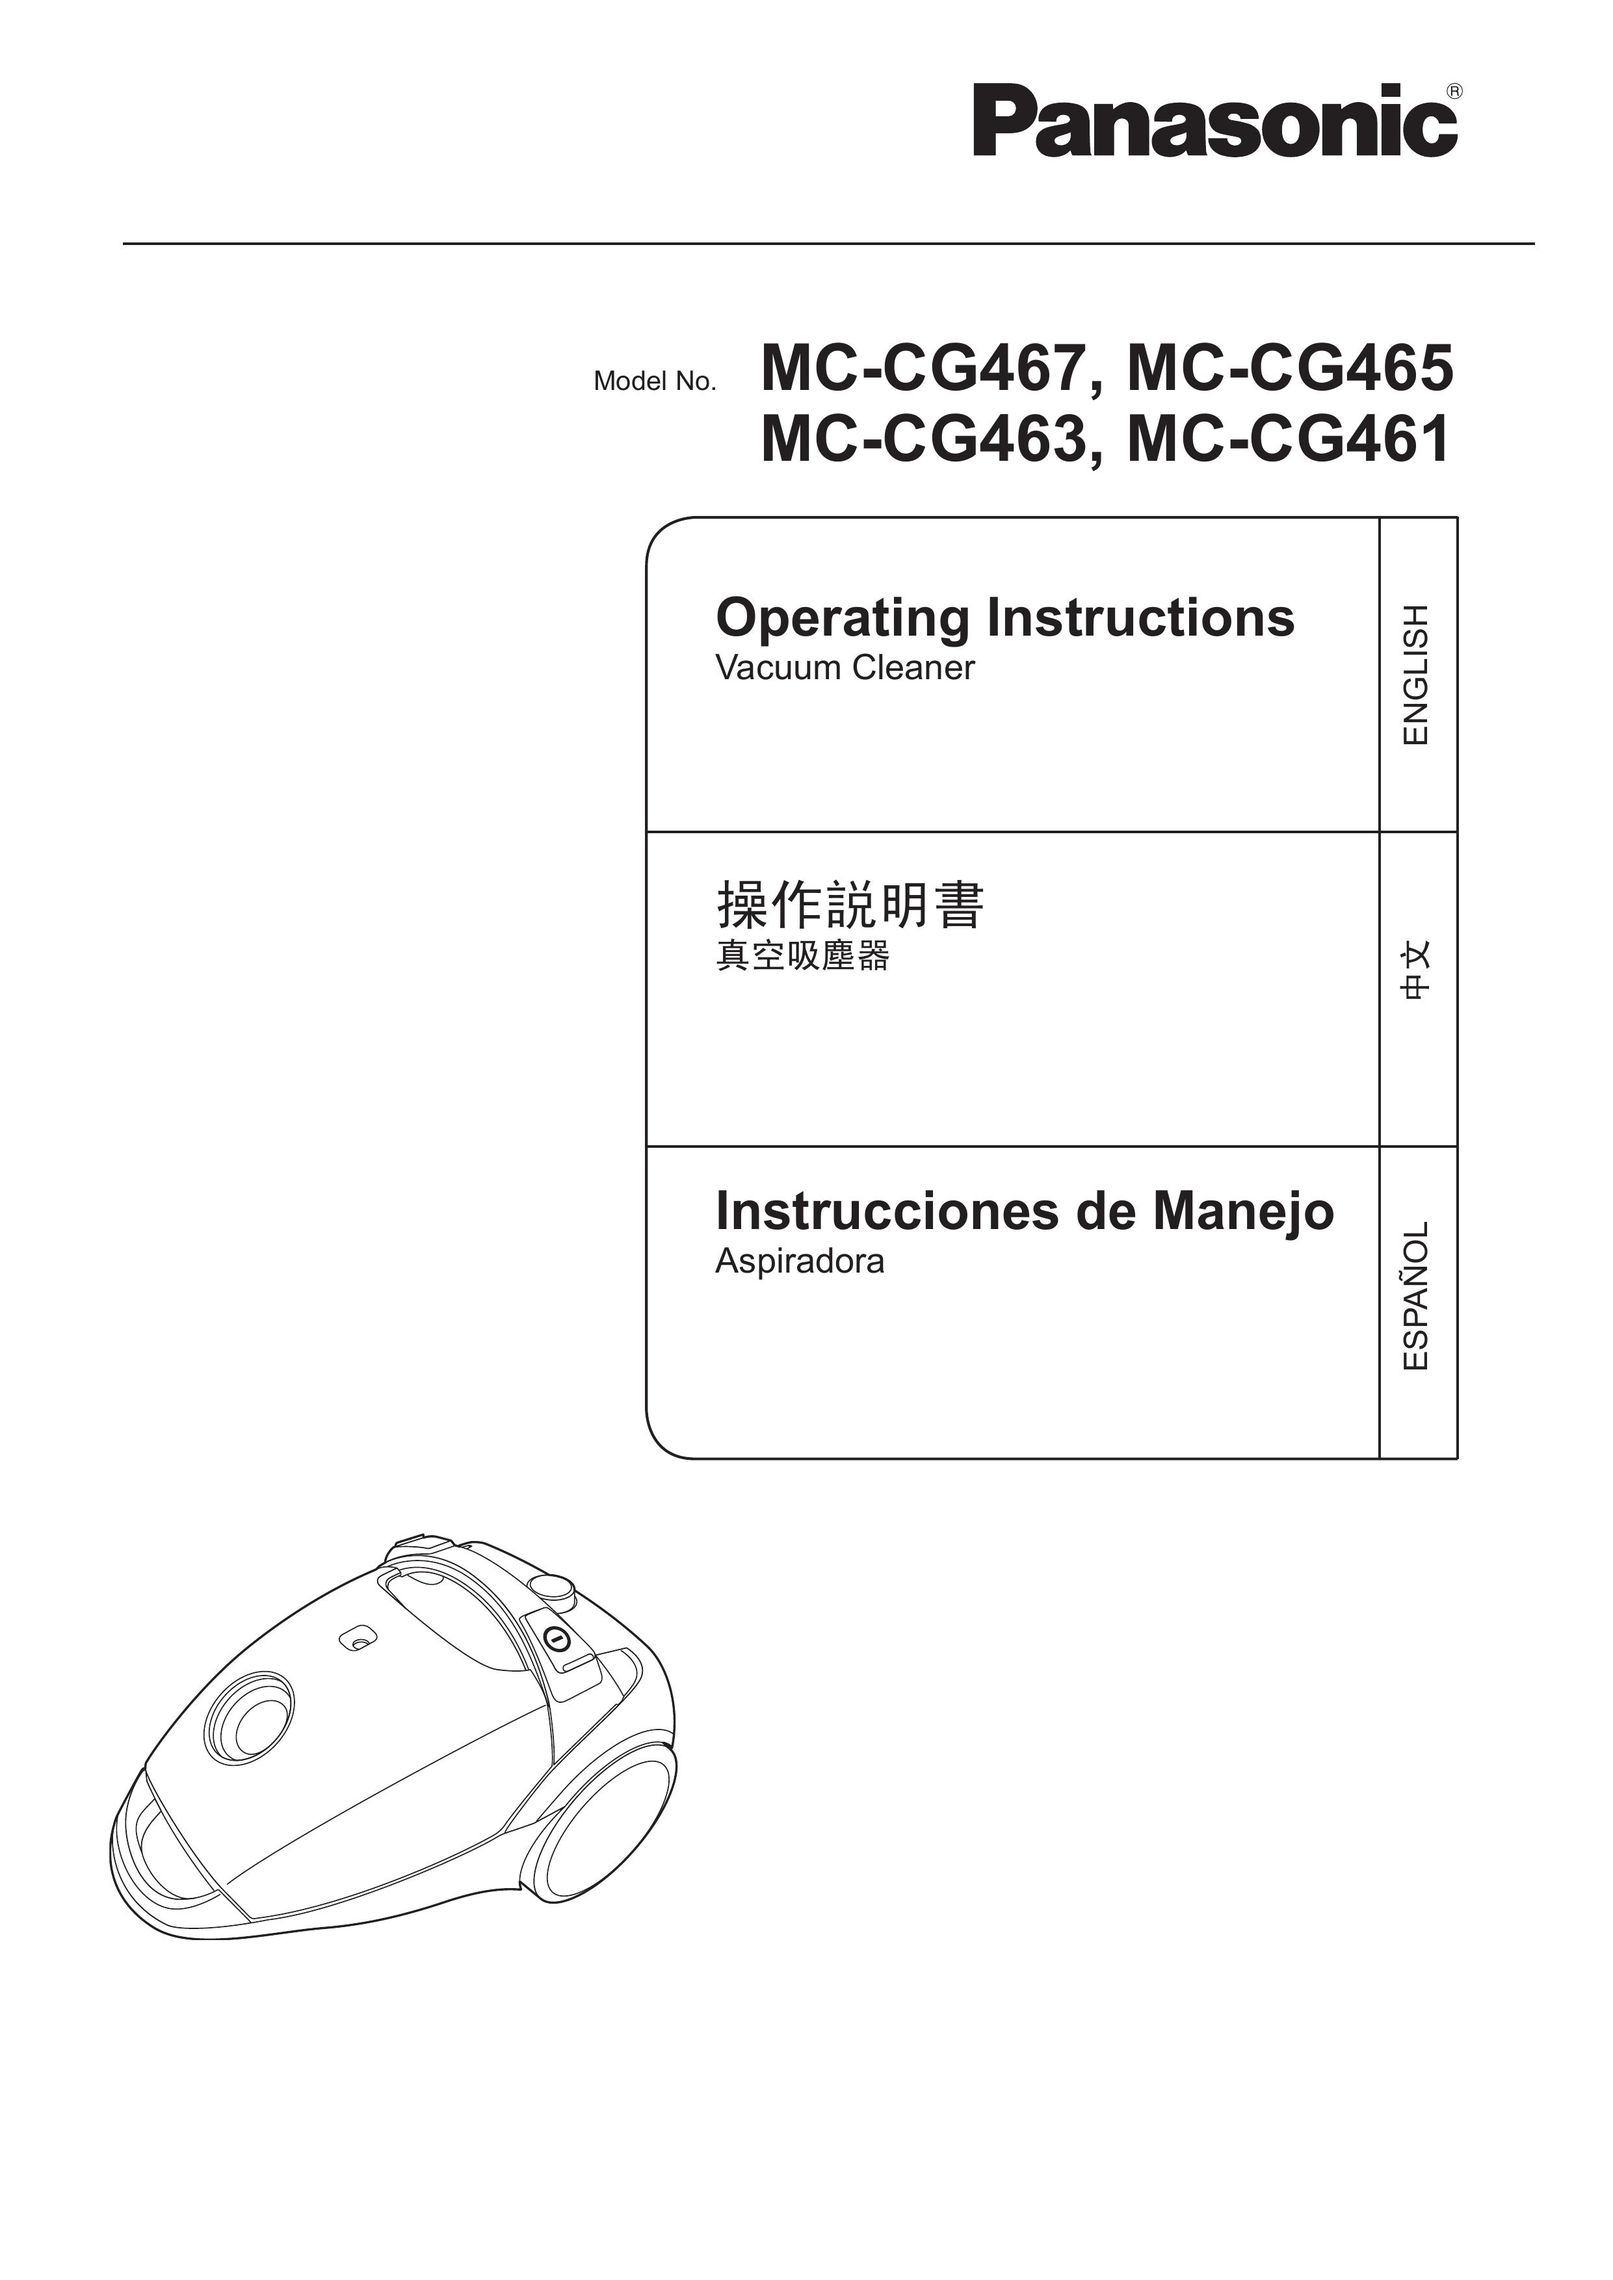 Panasonic MC-CG461 Vacuum Cleaner User Manual